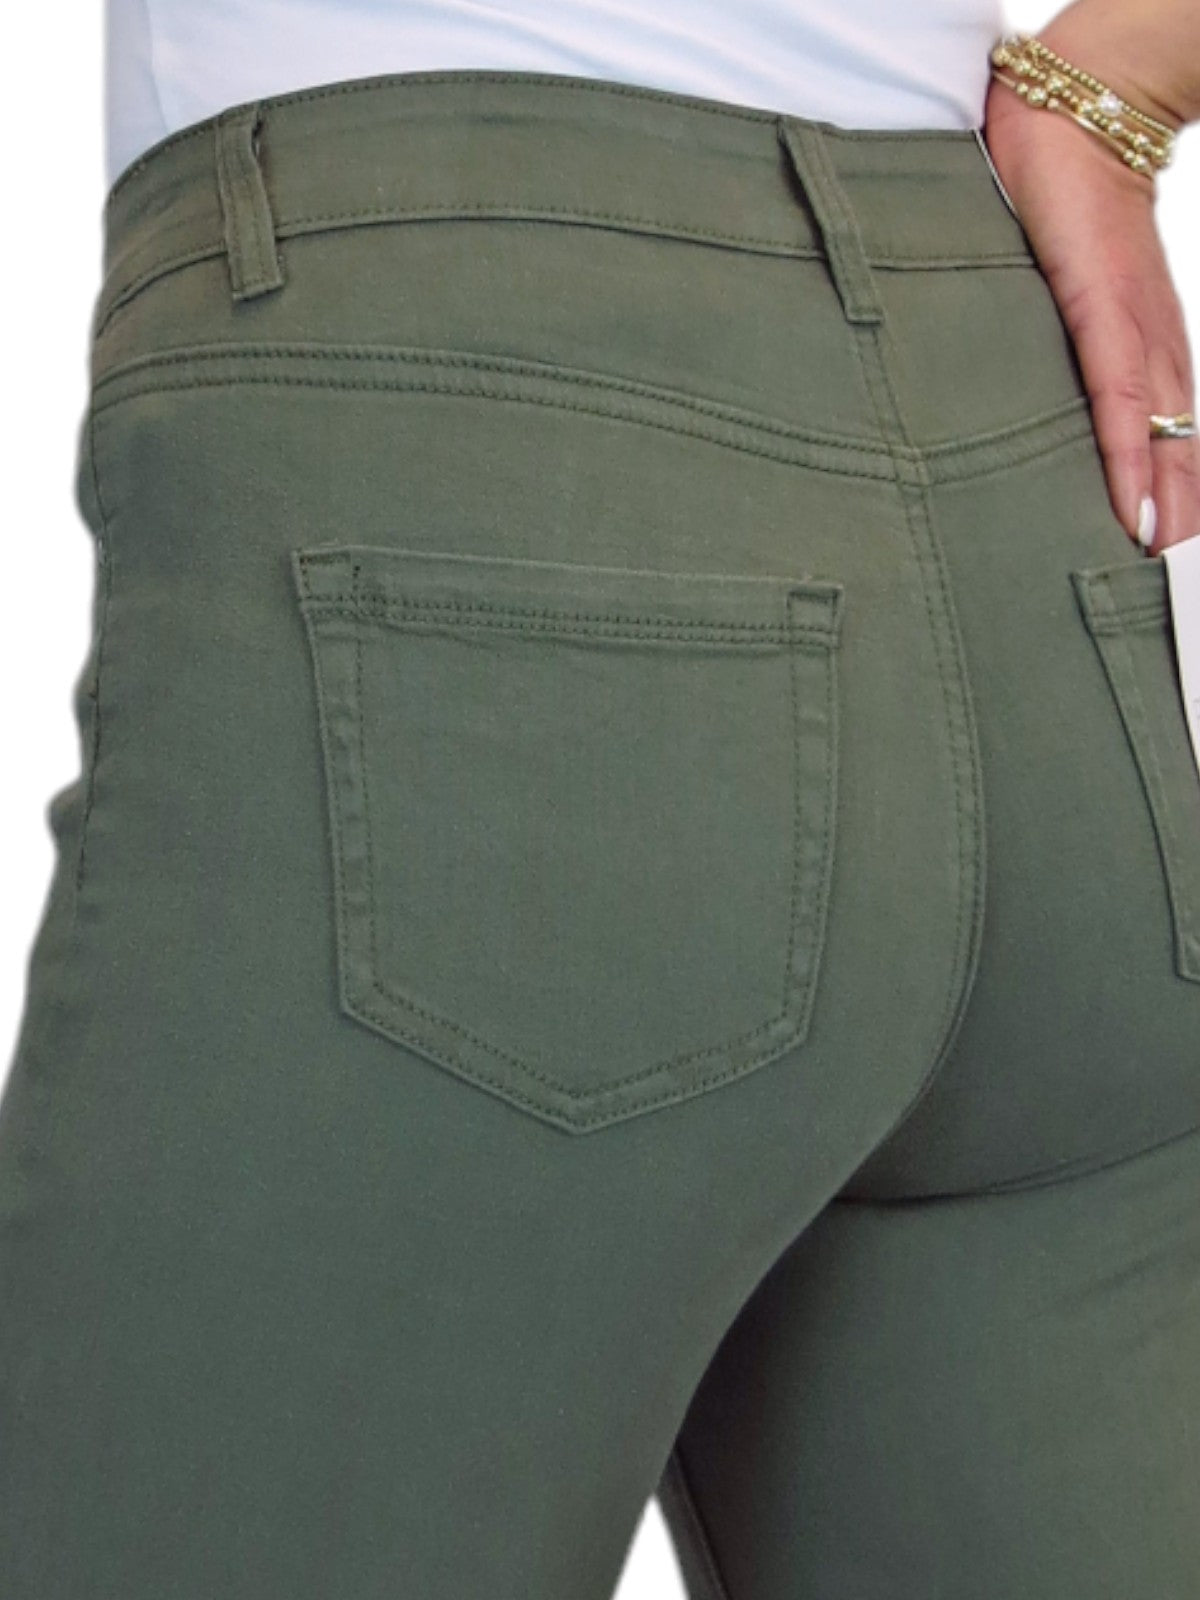 Women's Slim Leg Stretch Cotton Twill Jeans Khaki green